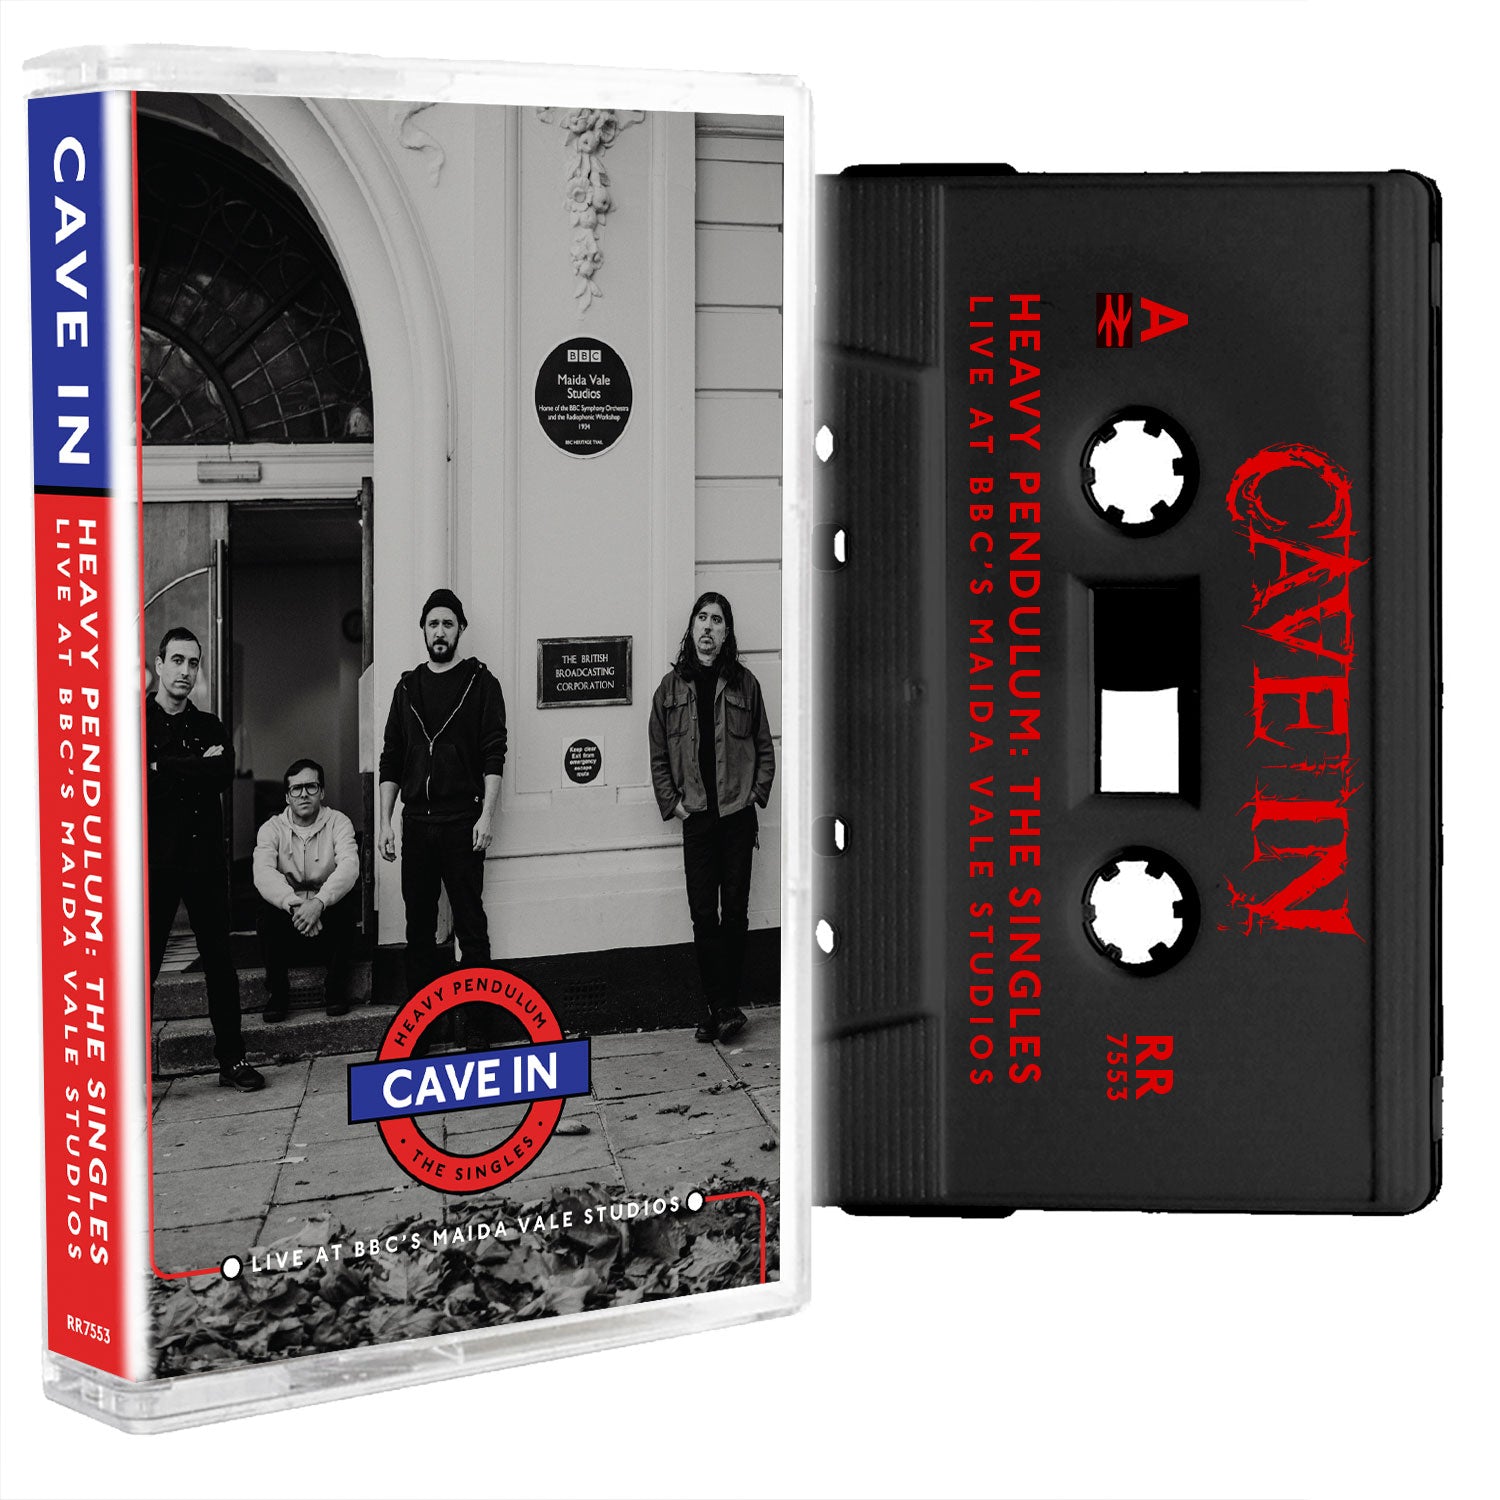 Cave In "Heavy Pendulum: The Singles - Live at BBC's Maida Vale Studios" Cassette